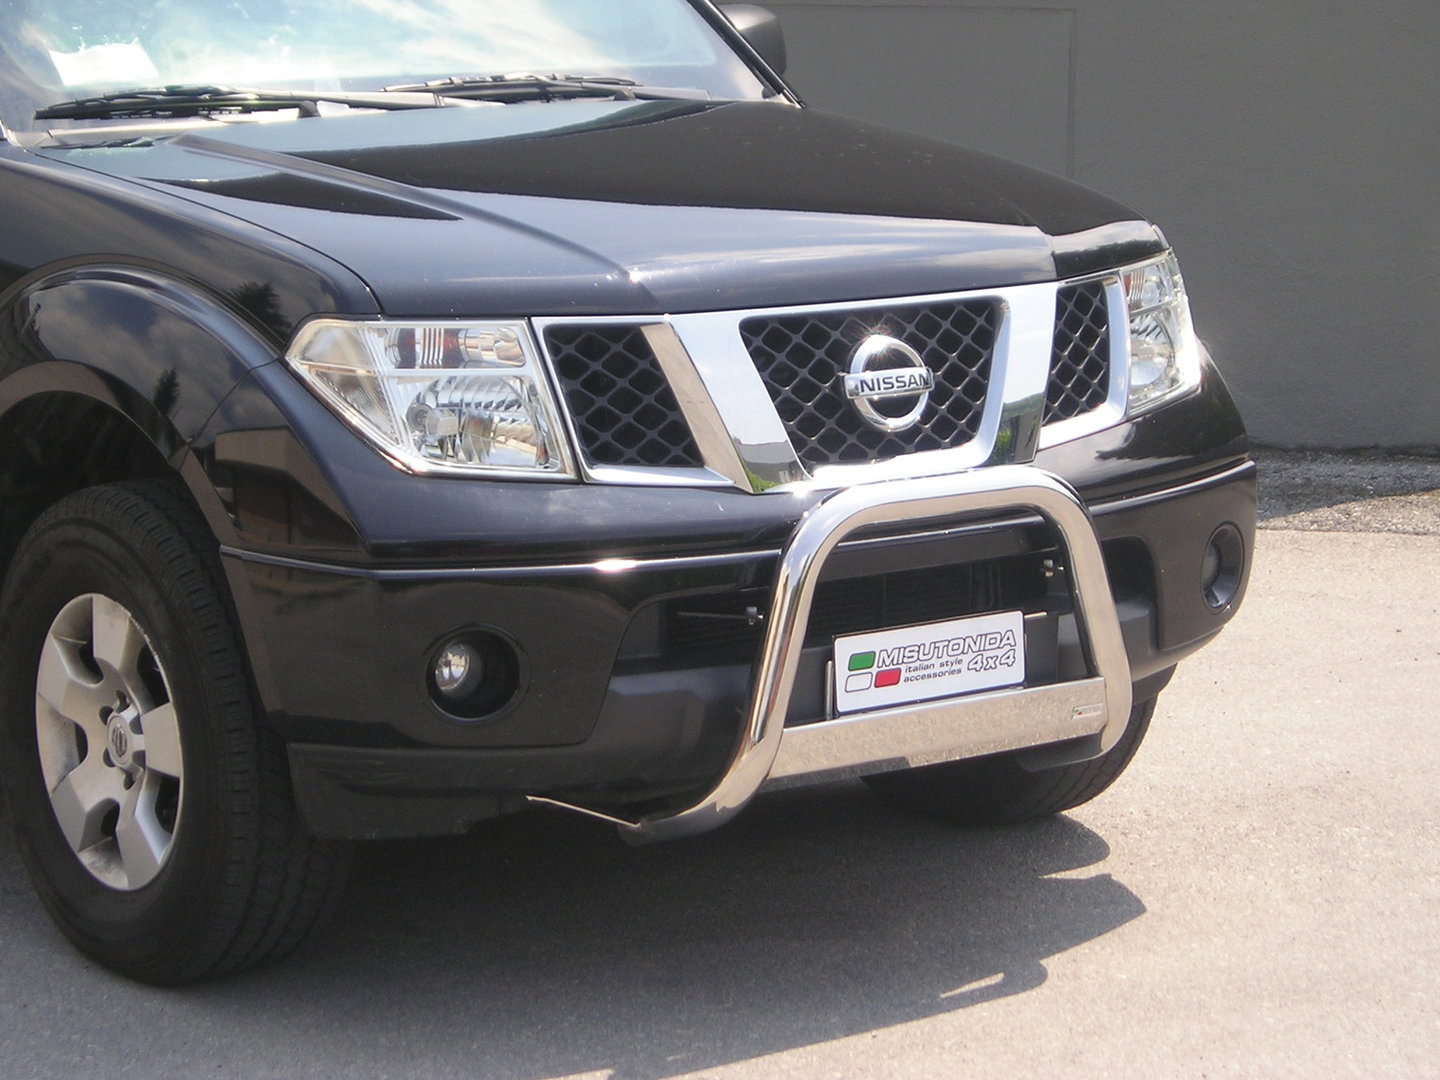 Nissan Navara EU-Front guard 2006-2010 Misutonida